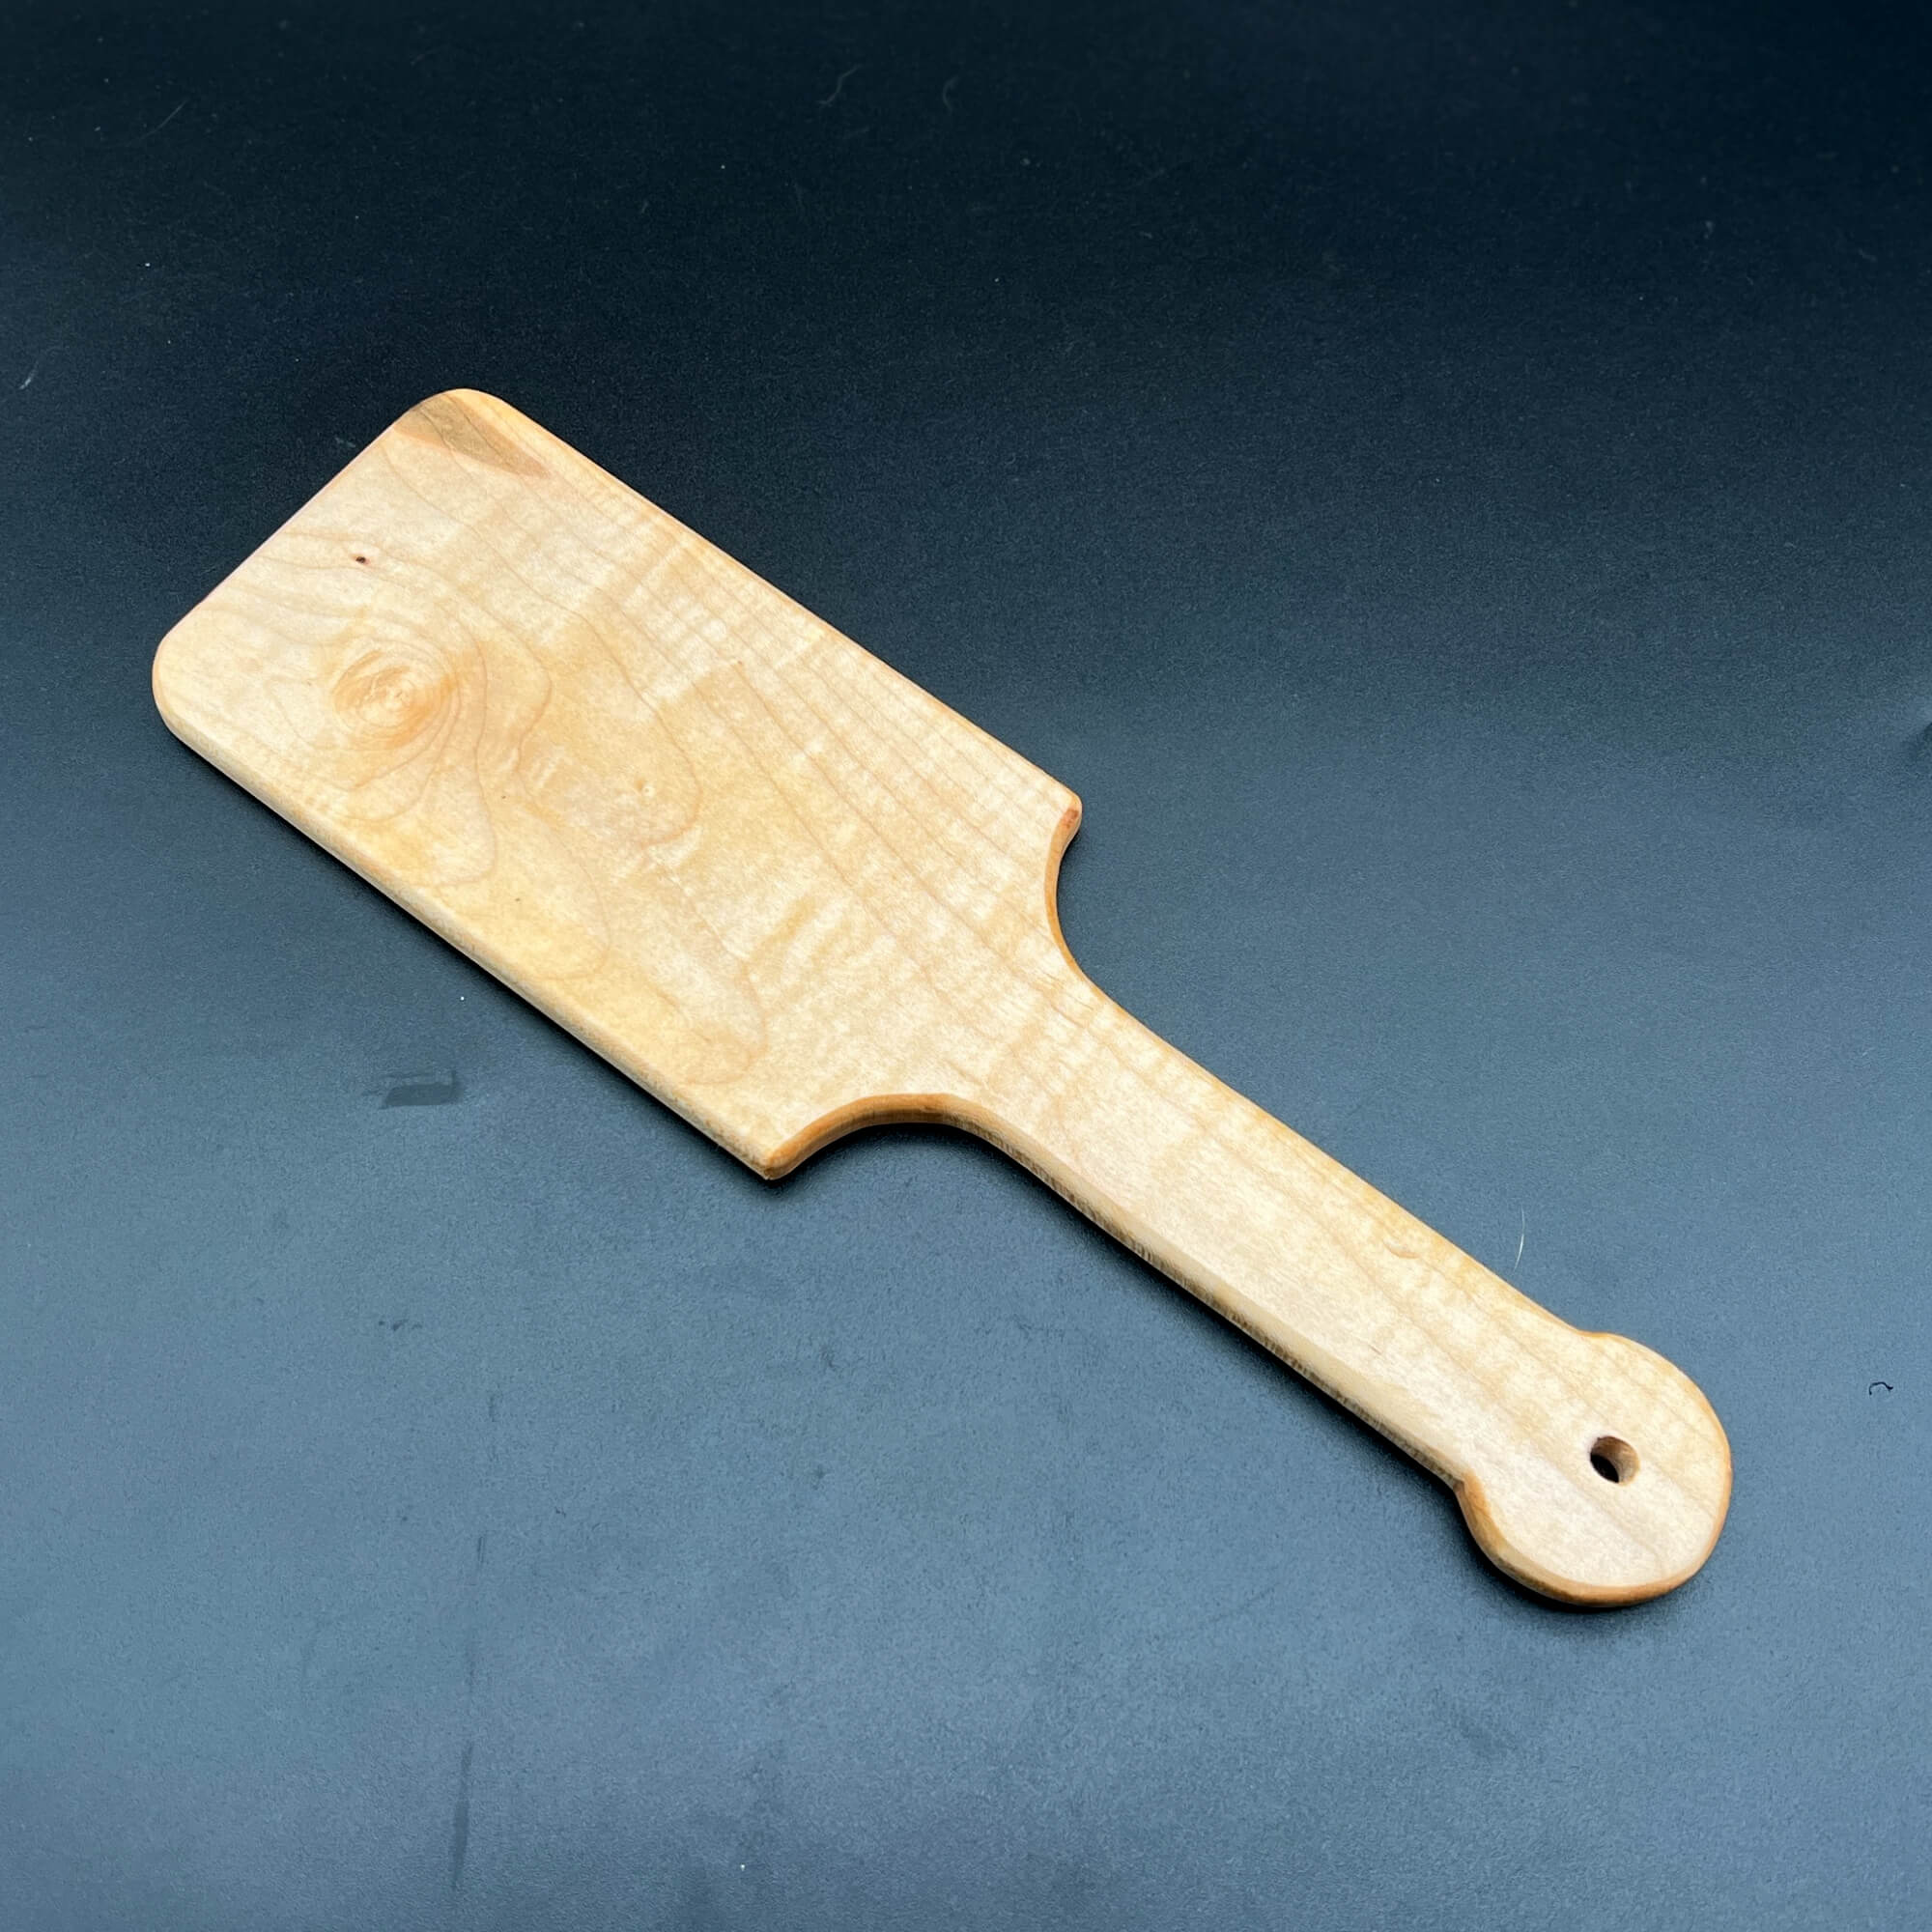 18 Long Wooden Spanking Paddle